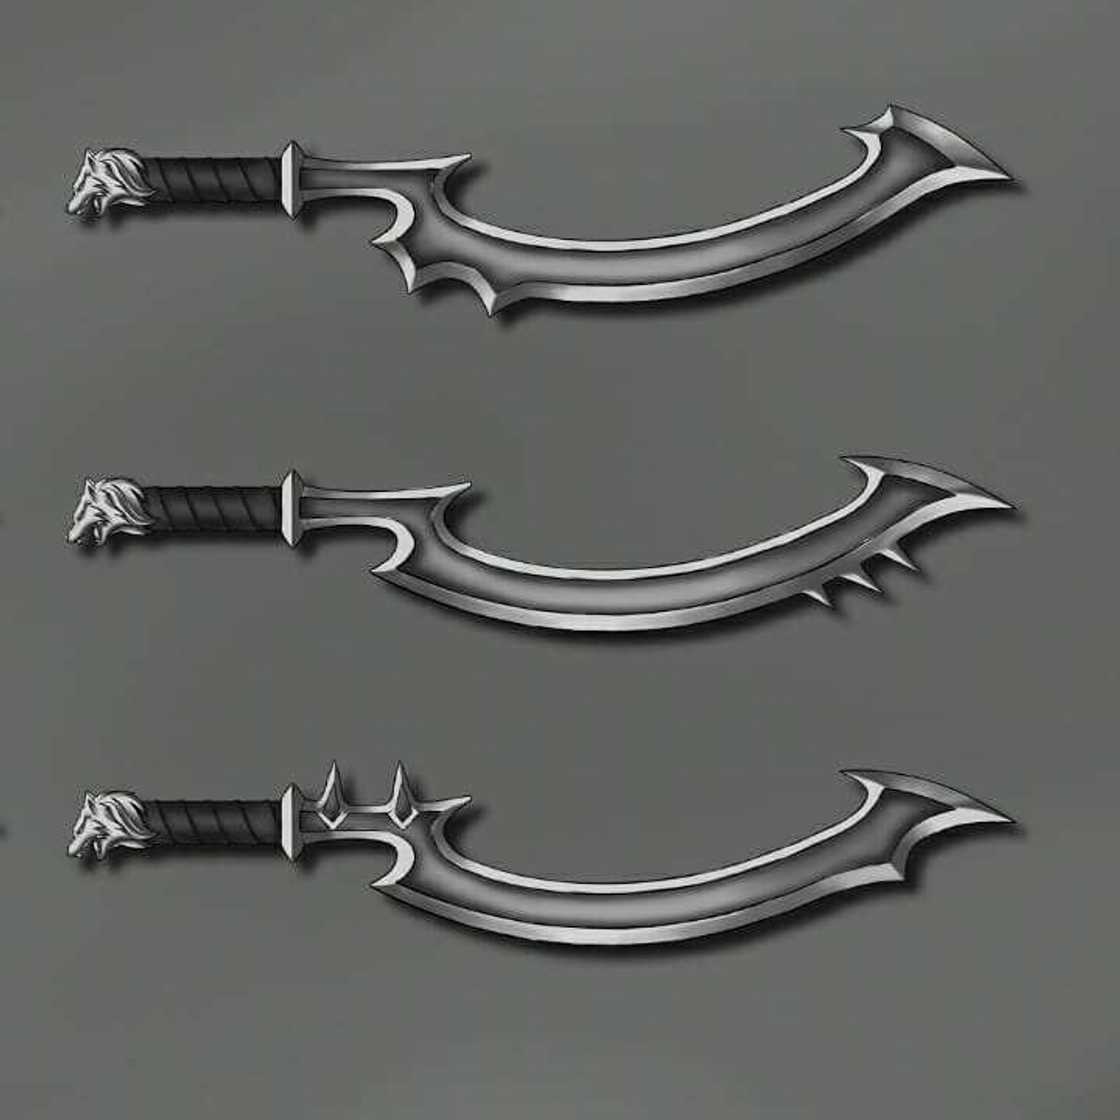 types of sword